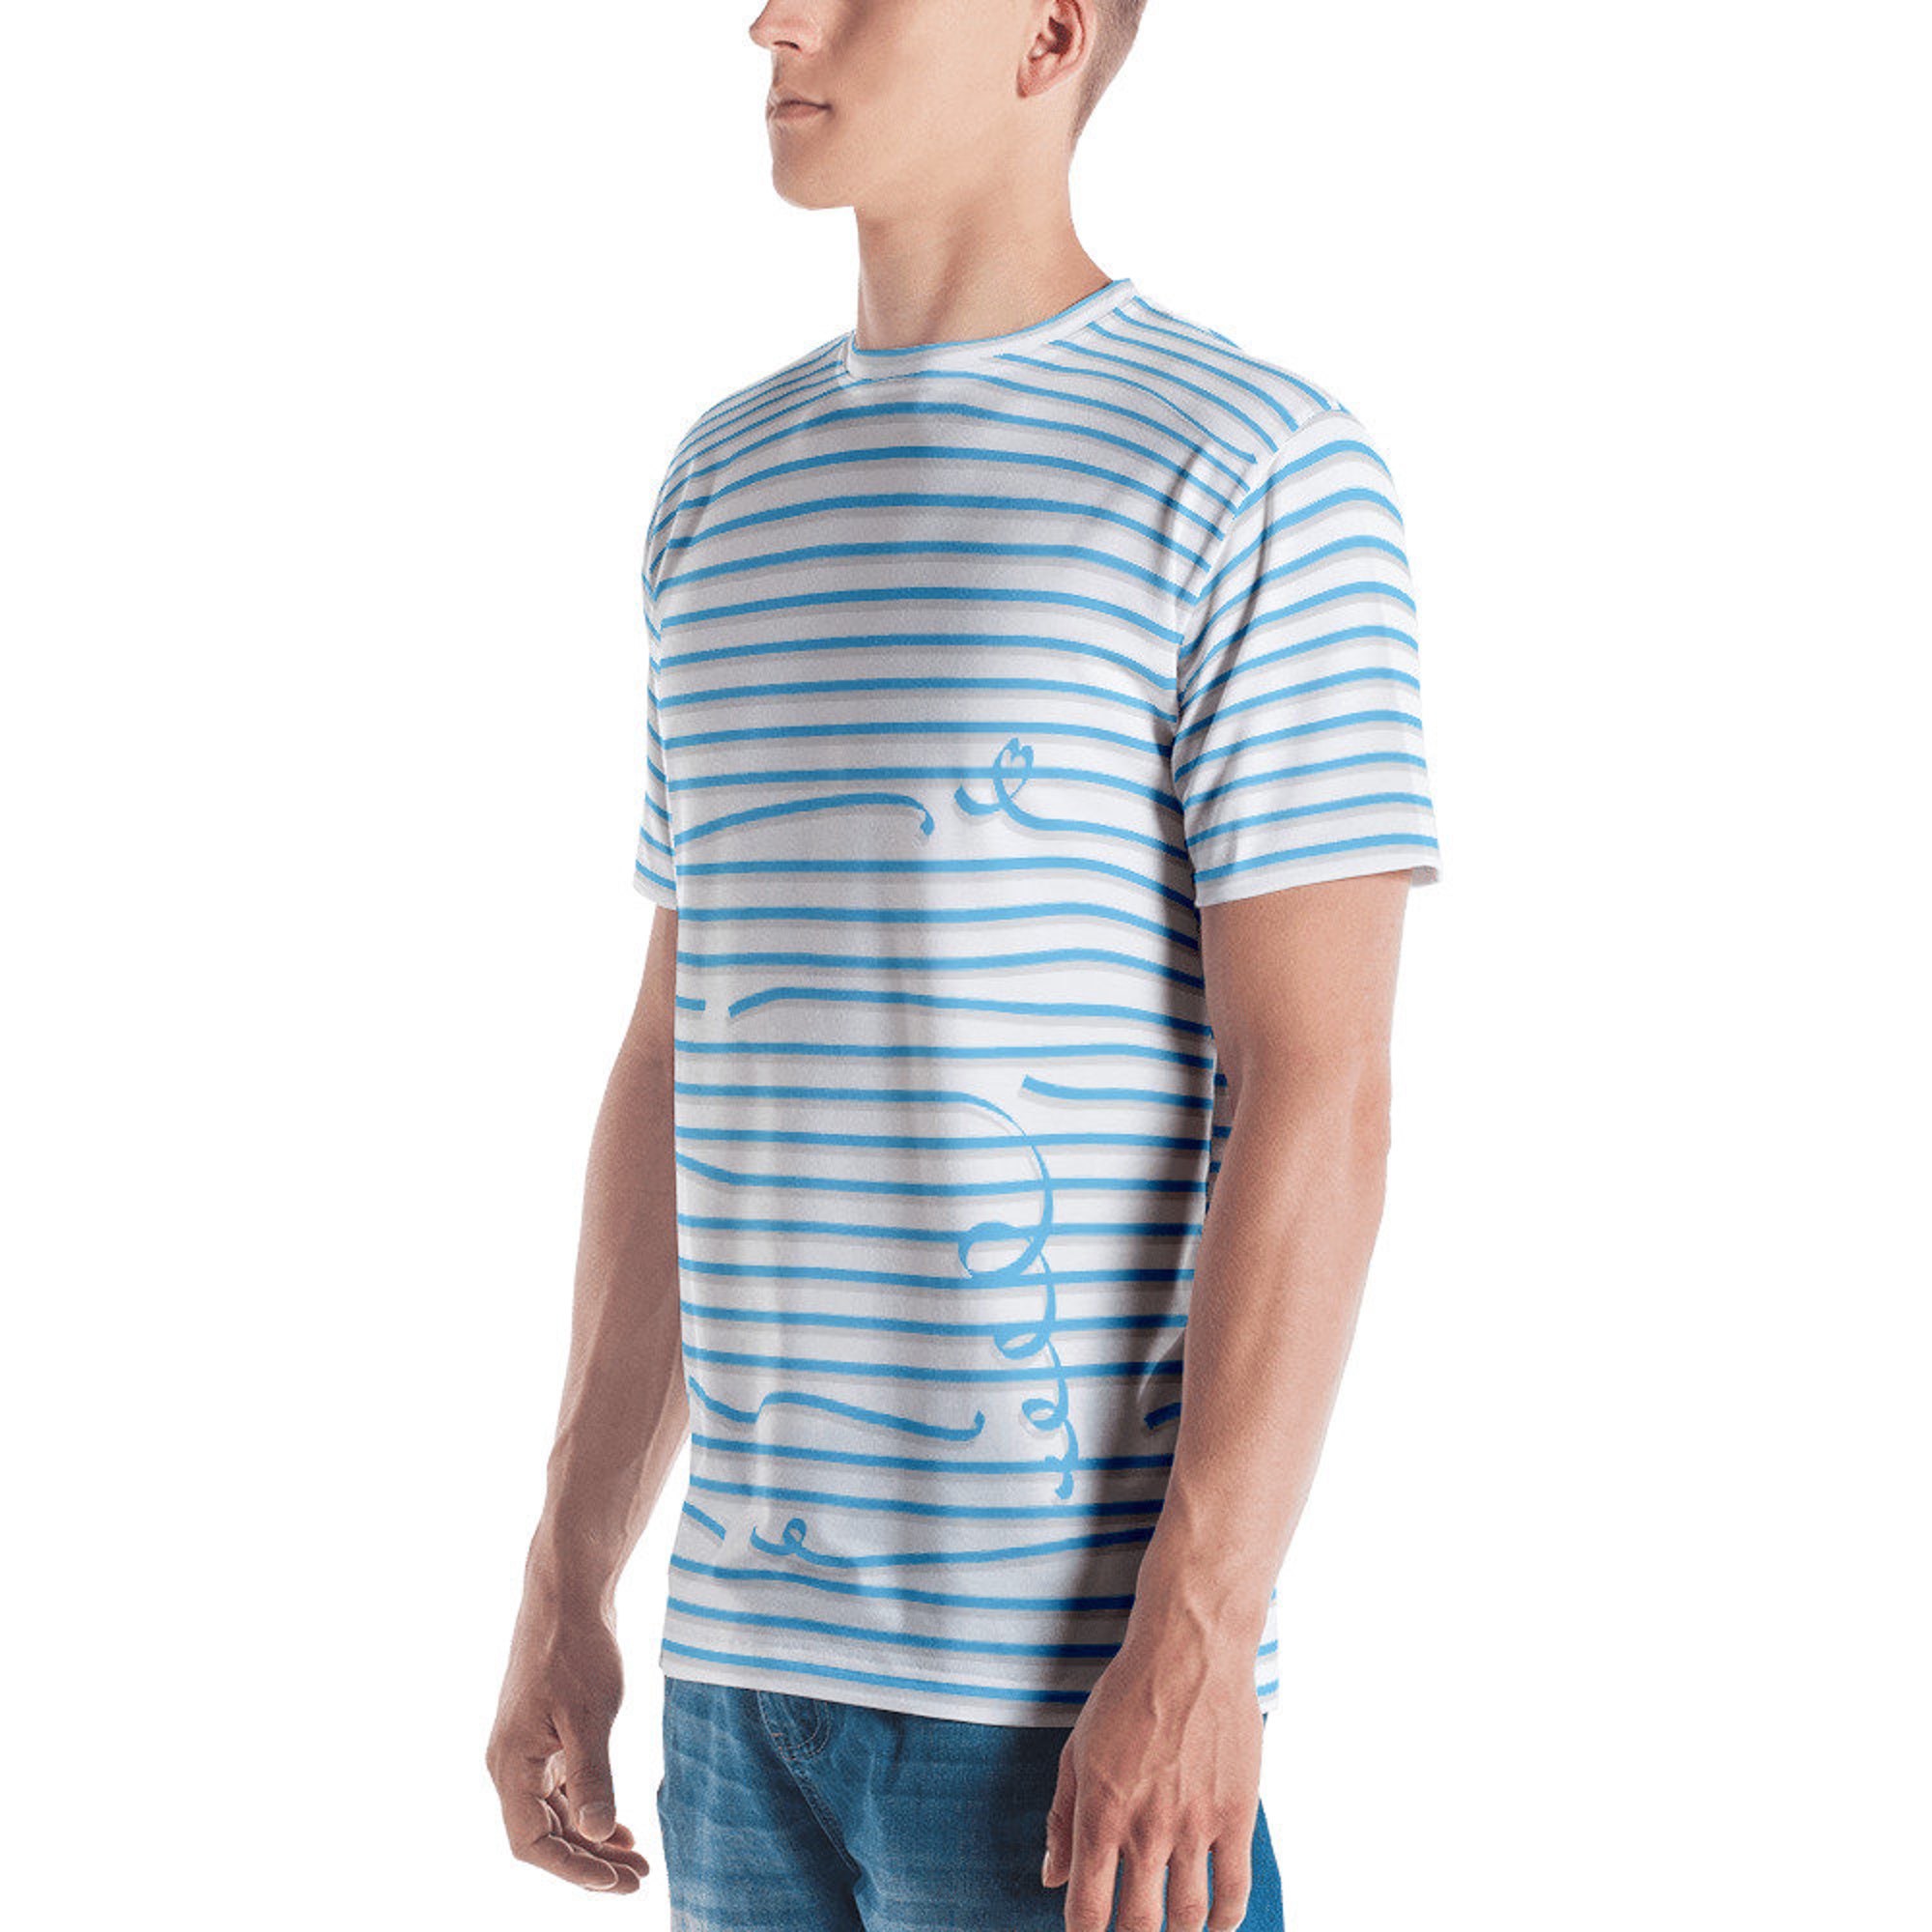 T-shirt, Pastel Blue Stripe pattern